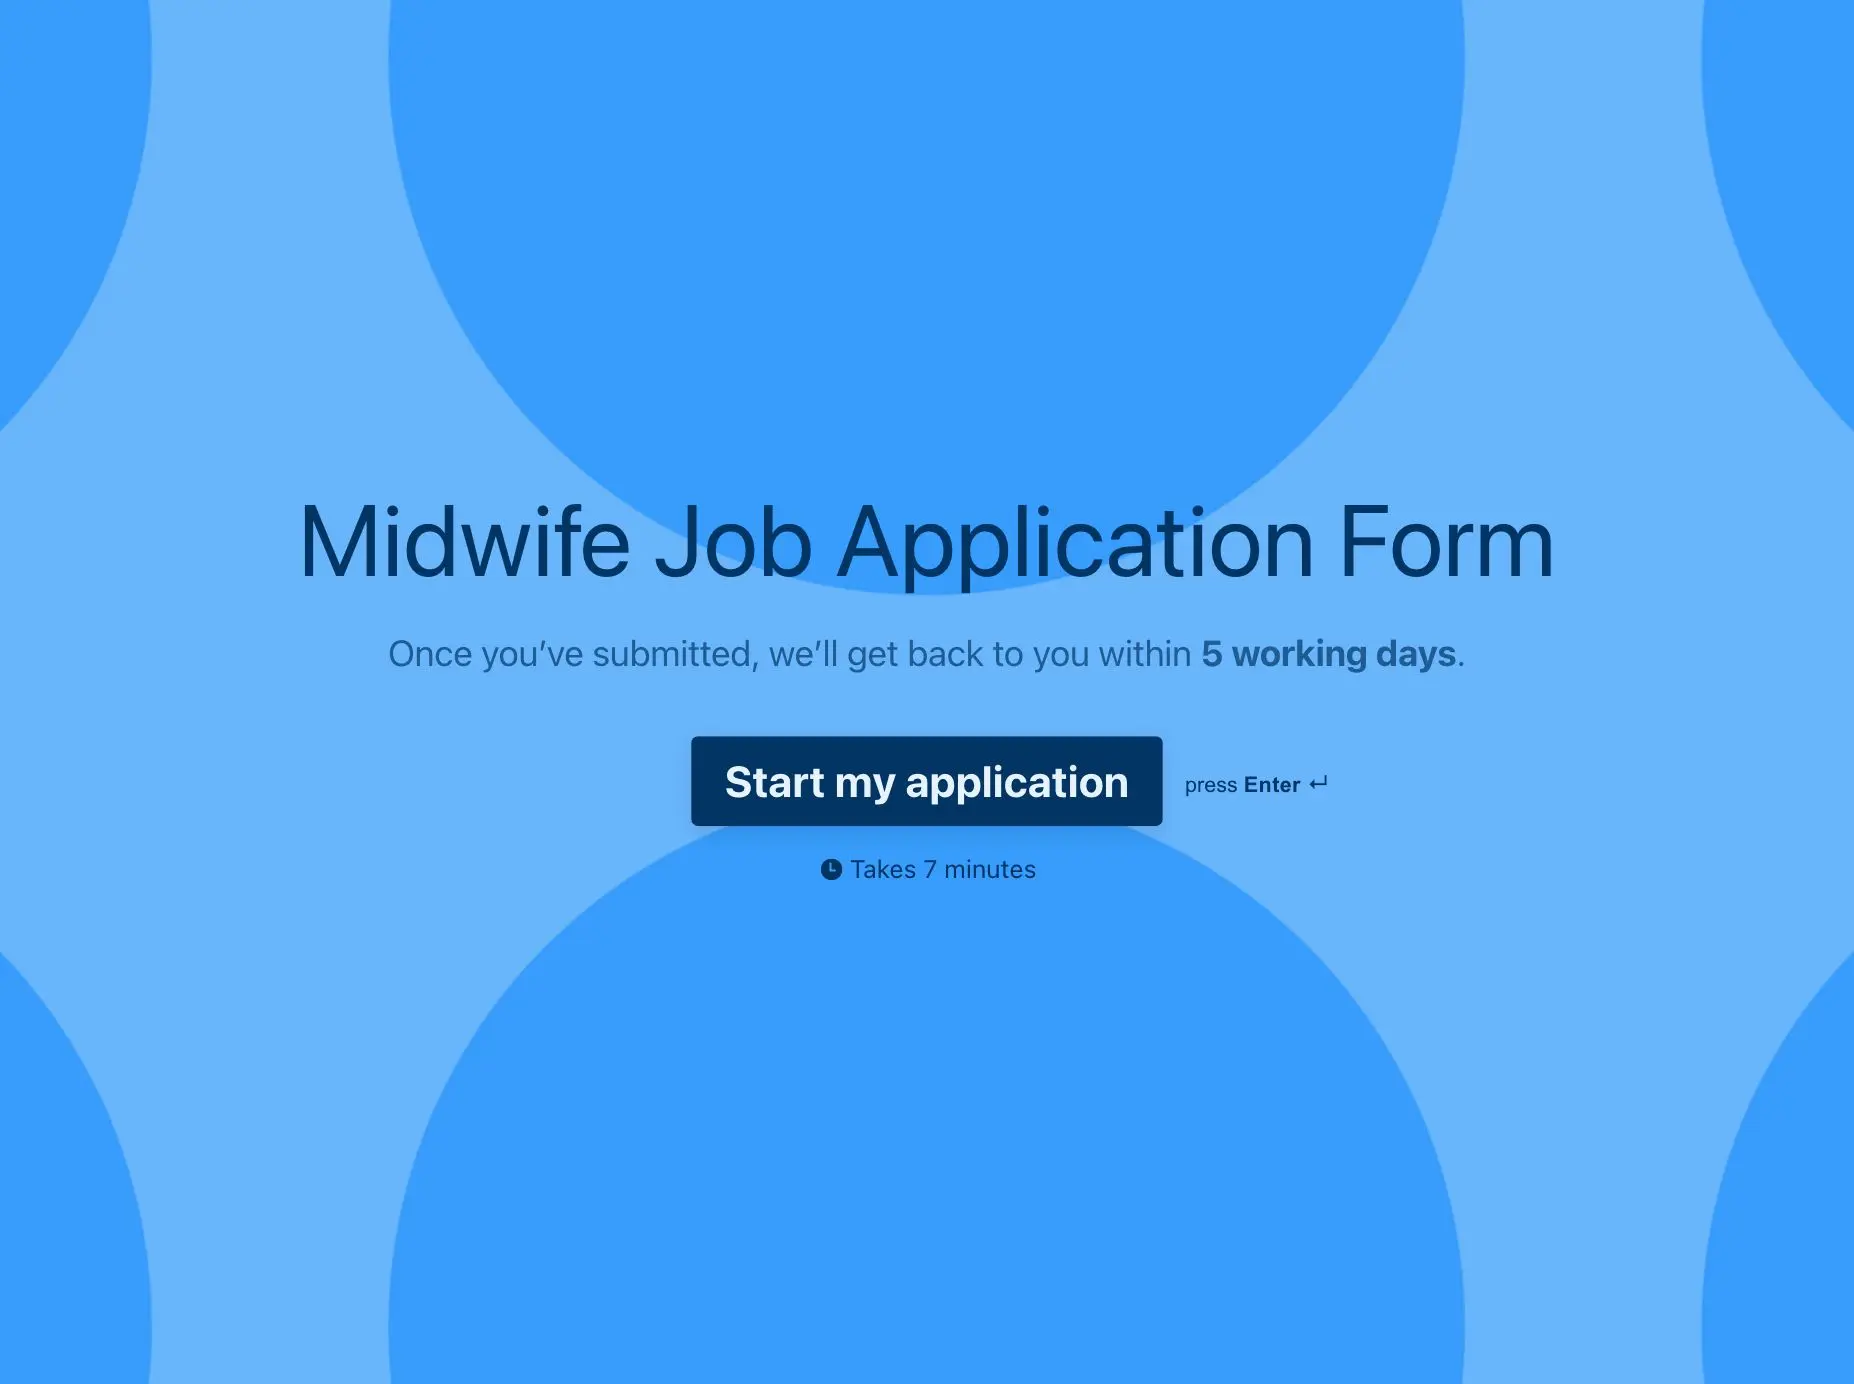 Midwife Job Application Form Template Hero